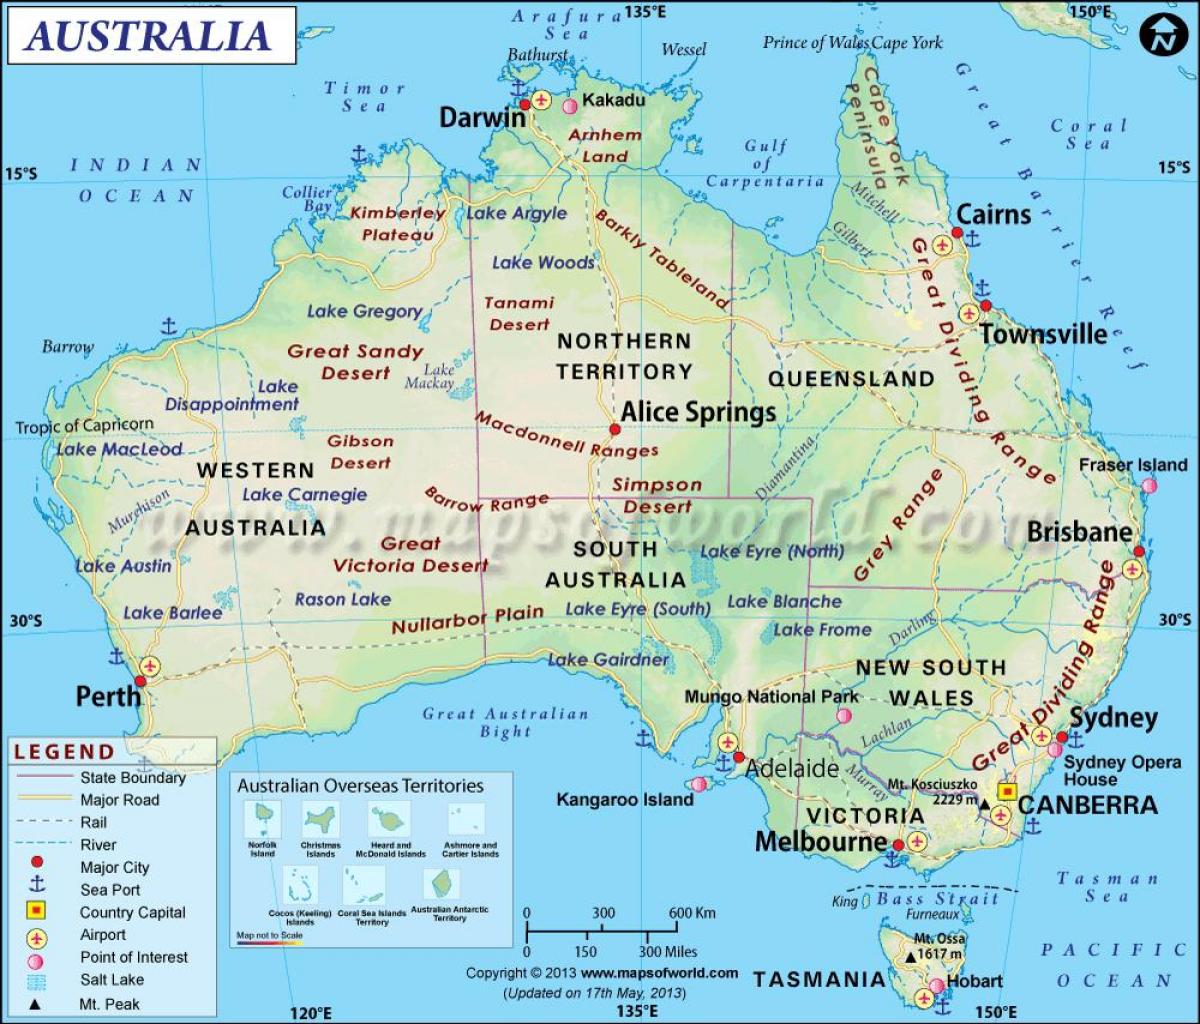 Australia on the map